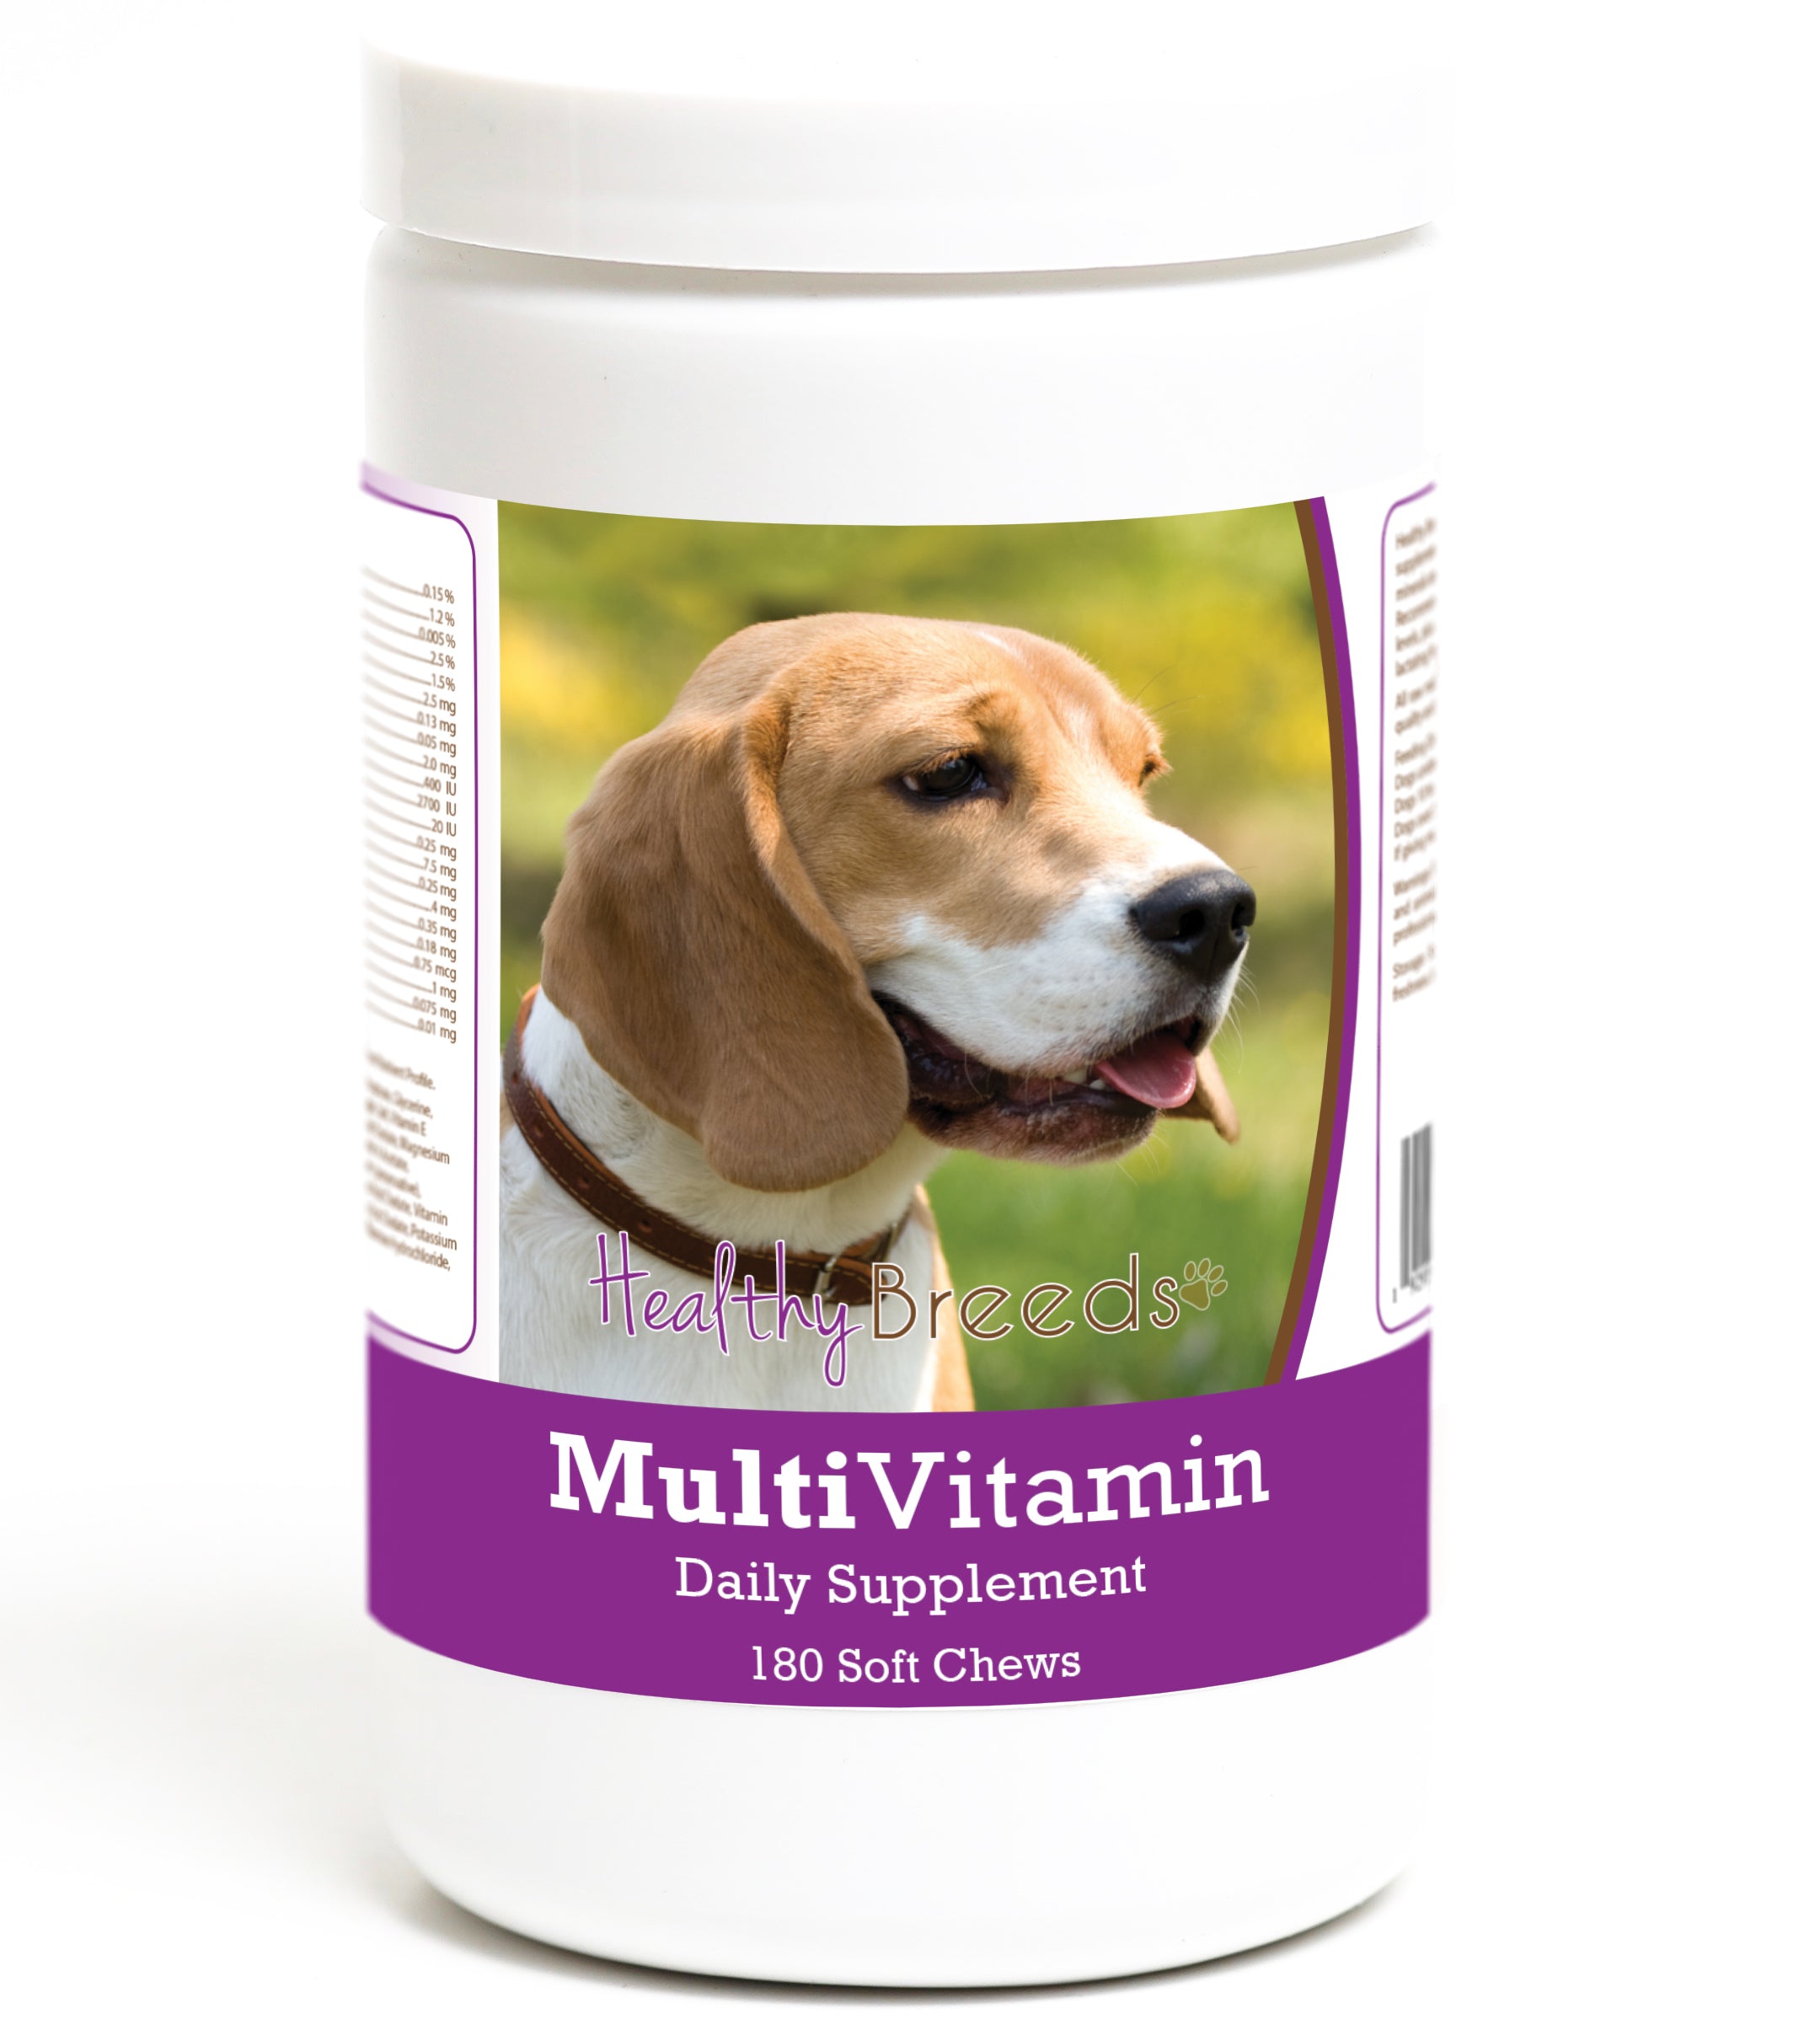 Beagle Multivitamin Soft Chew for Dogs 180 Count